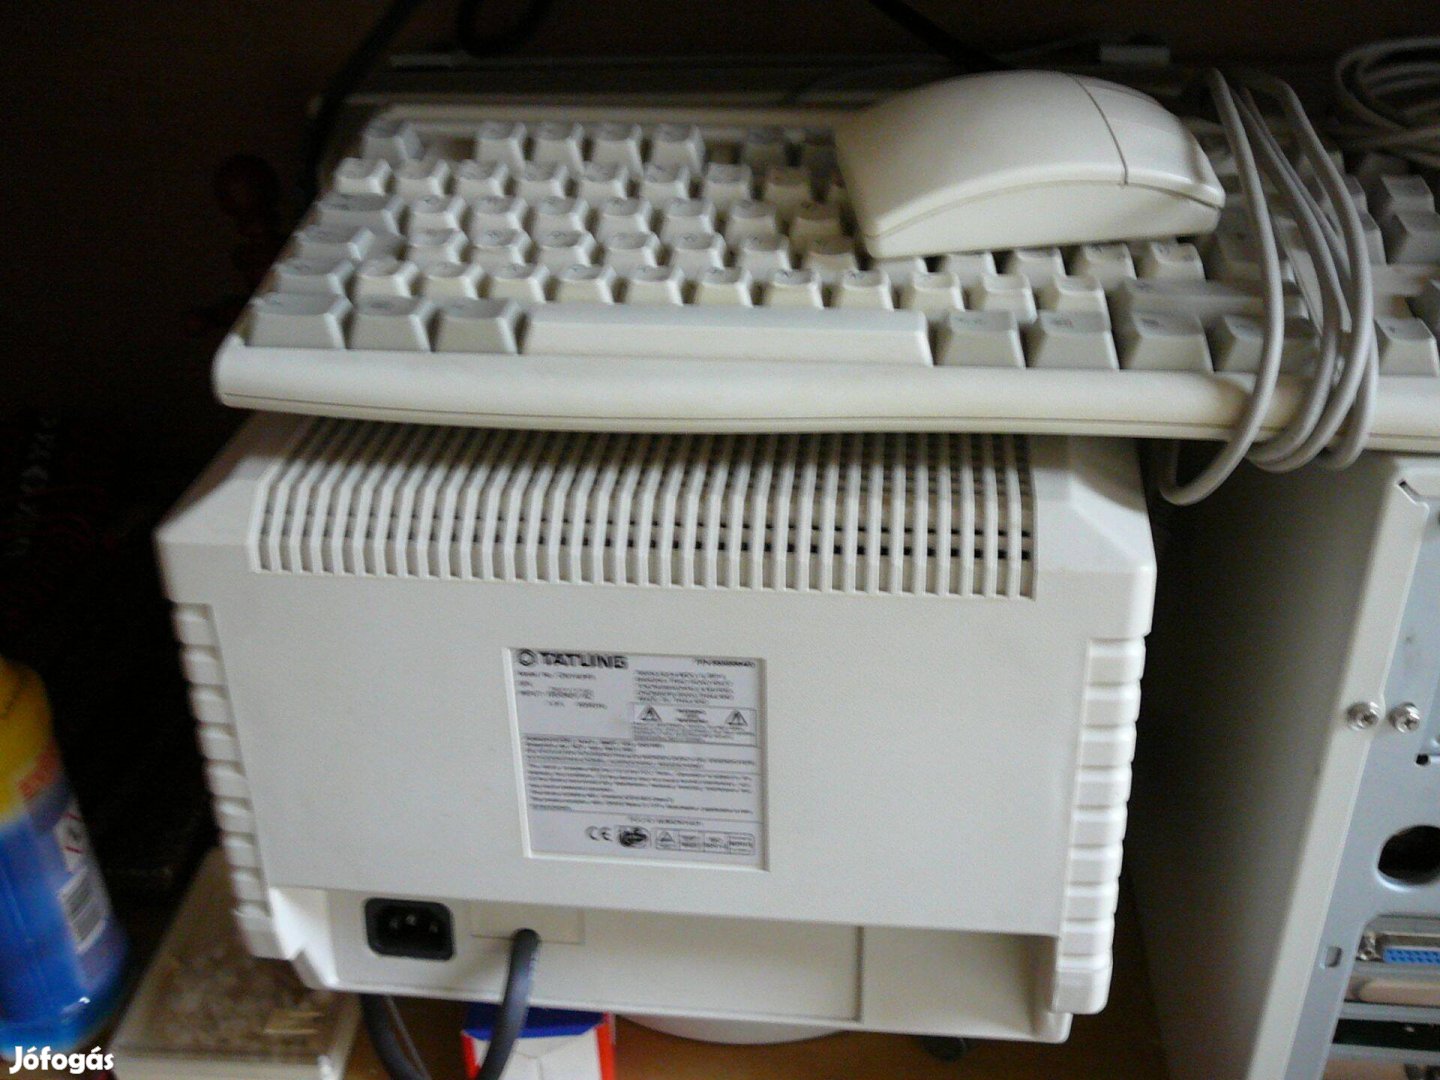 Retro Pc 686-os tip. 1999-os gyártású KPL, windows 98-as